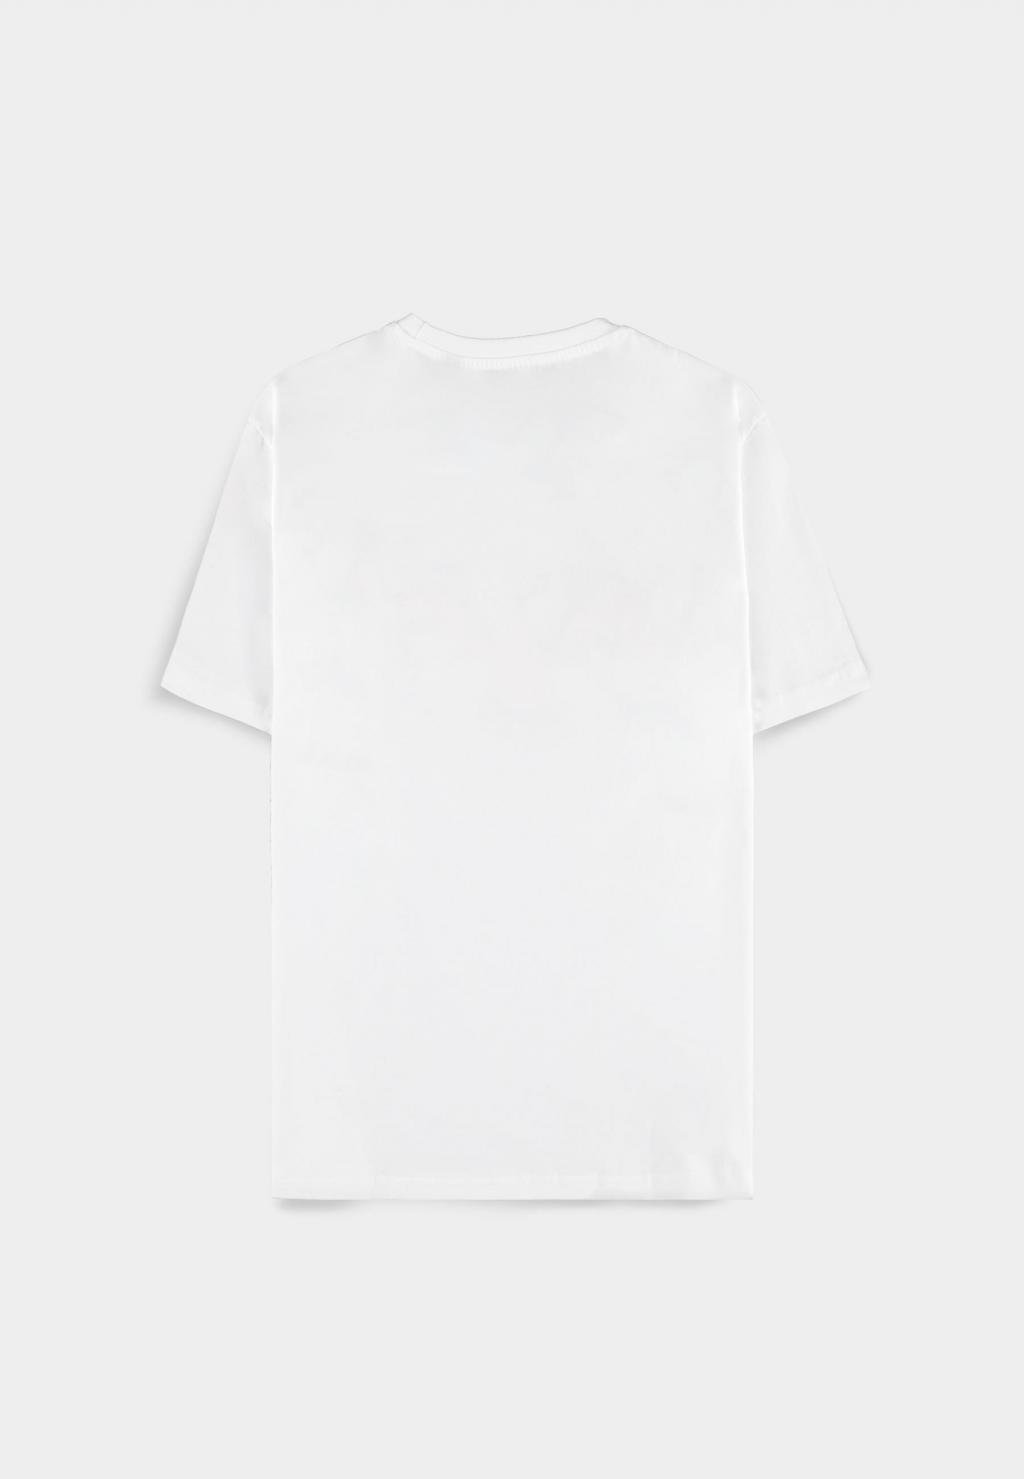 POKEMON - Charizard #006 - Men's T-Shirt (2XL)